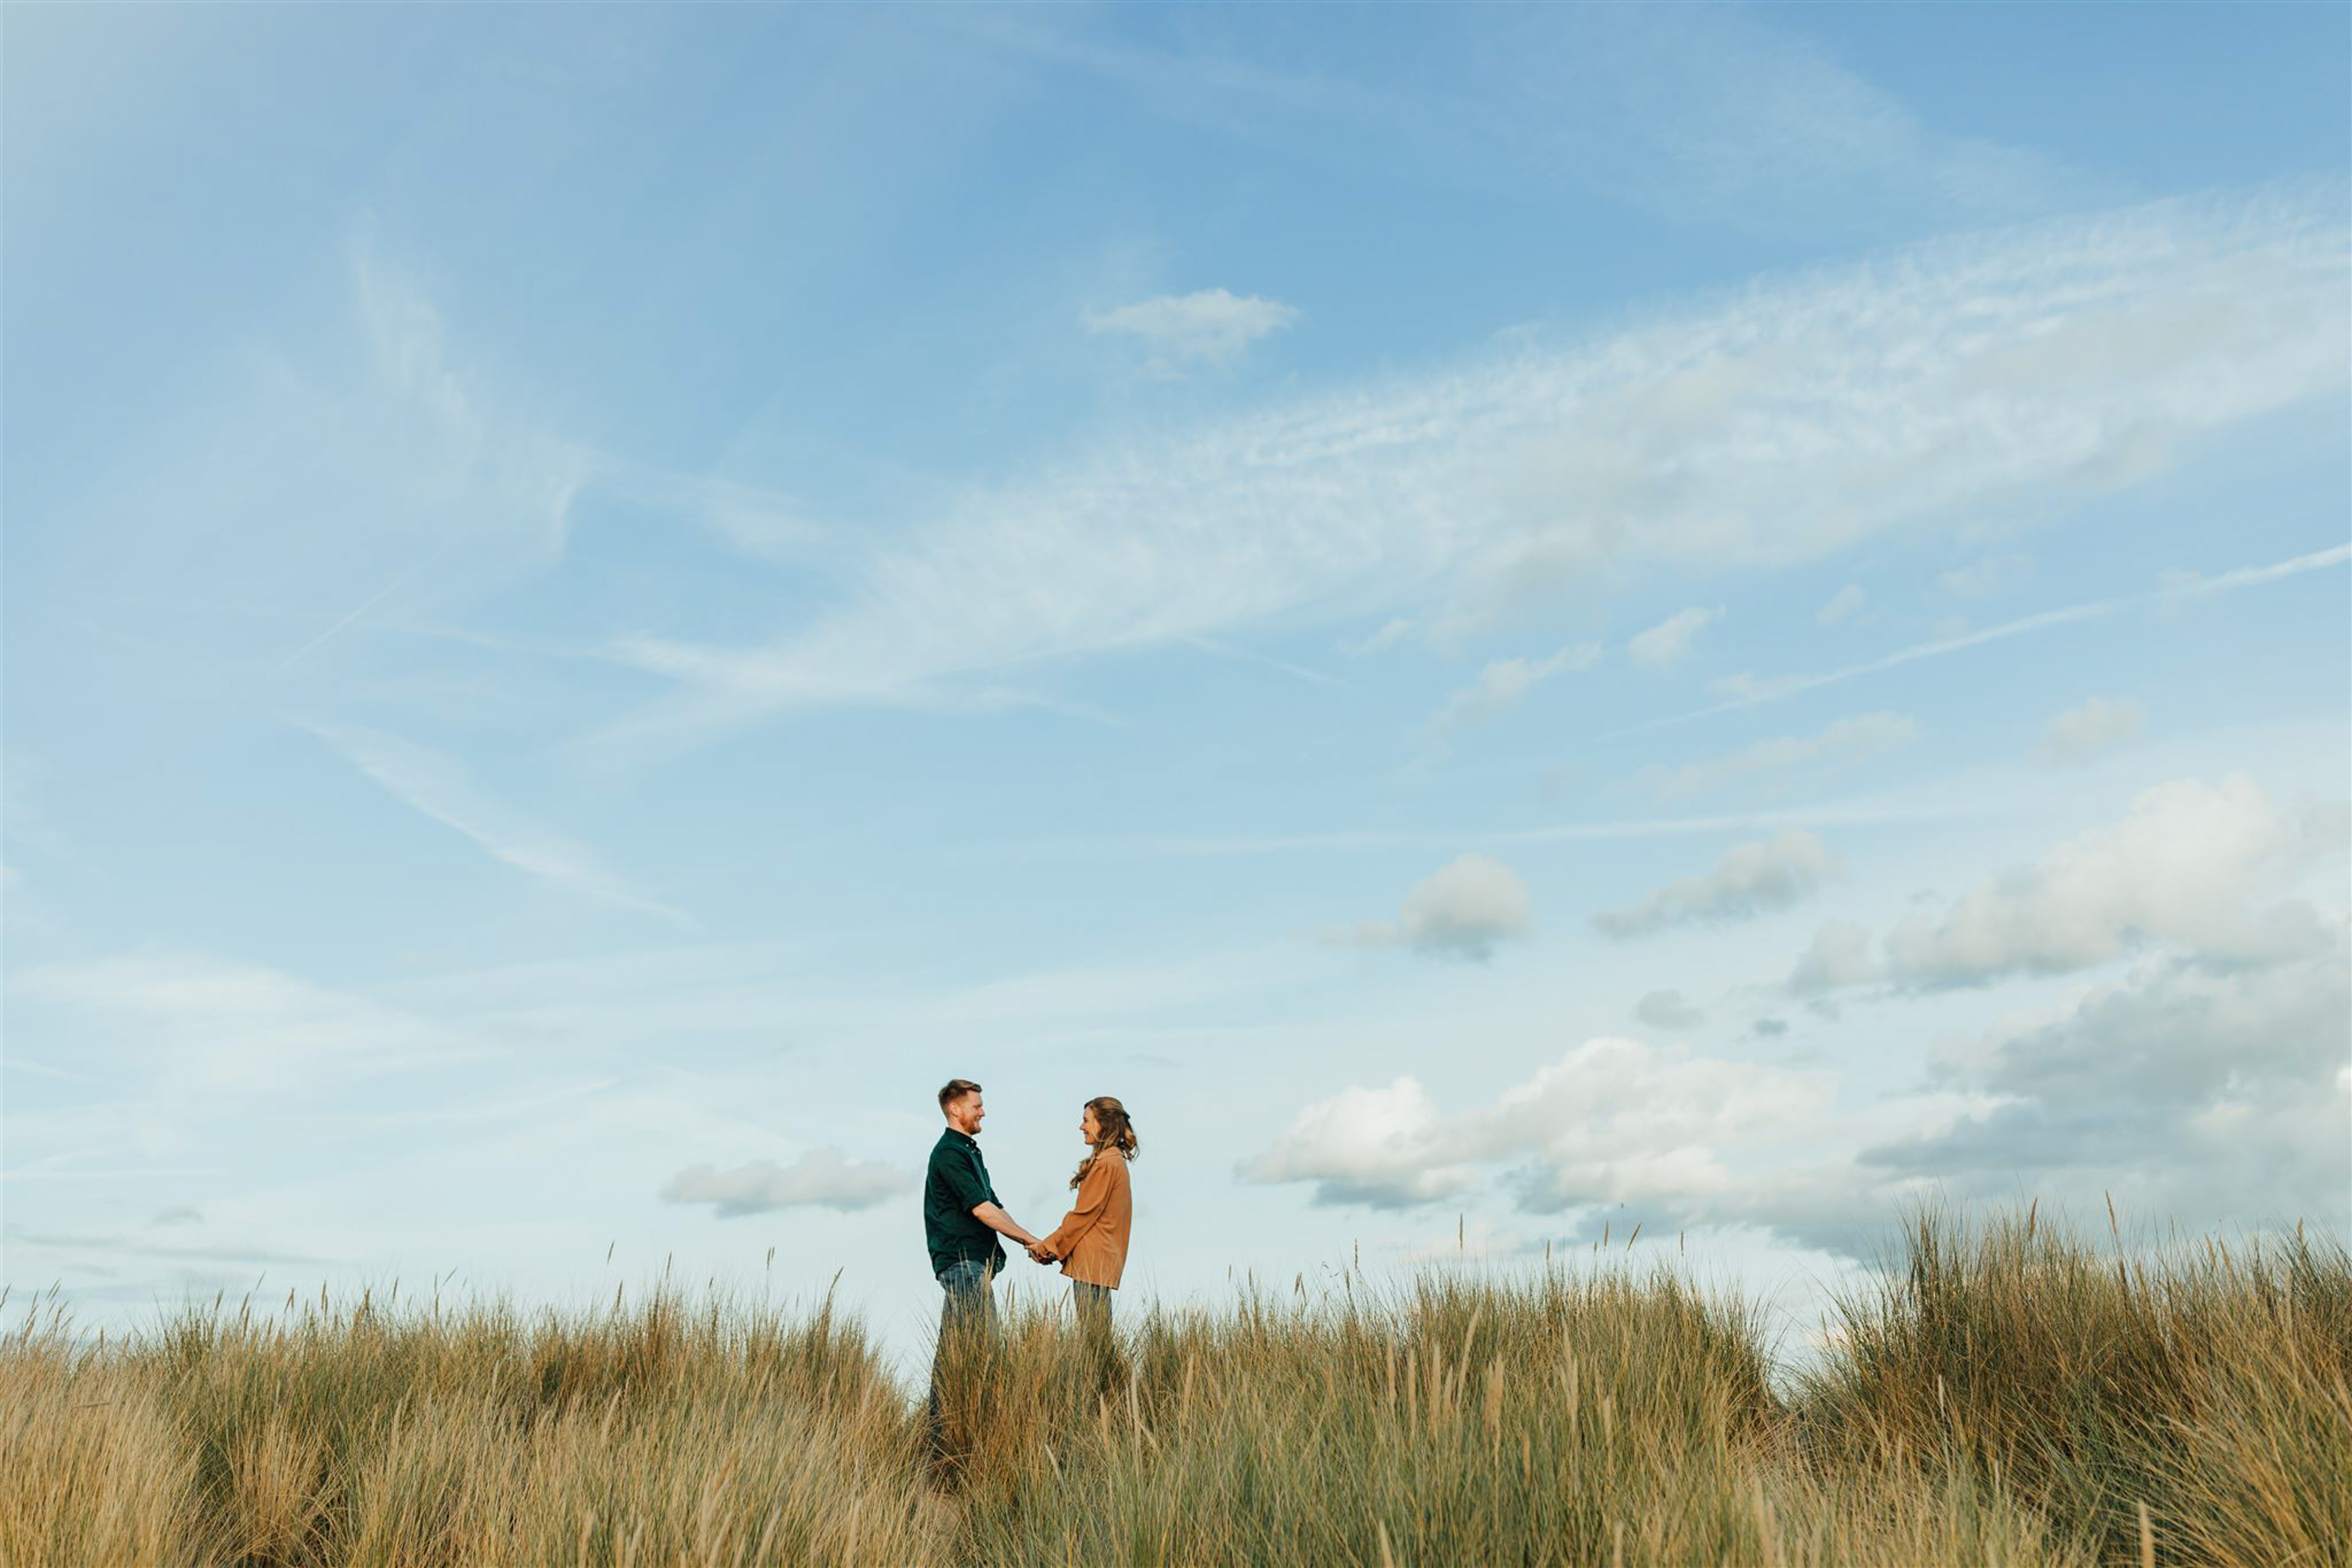 Engagement Photoshoot at Shell Bay Beach by Dorset Wedding Photographer, Aimee Joy Photography